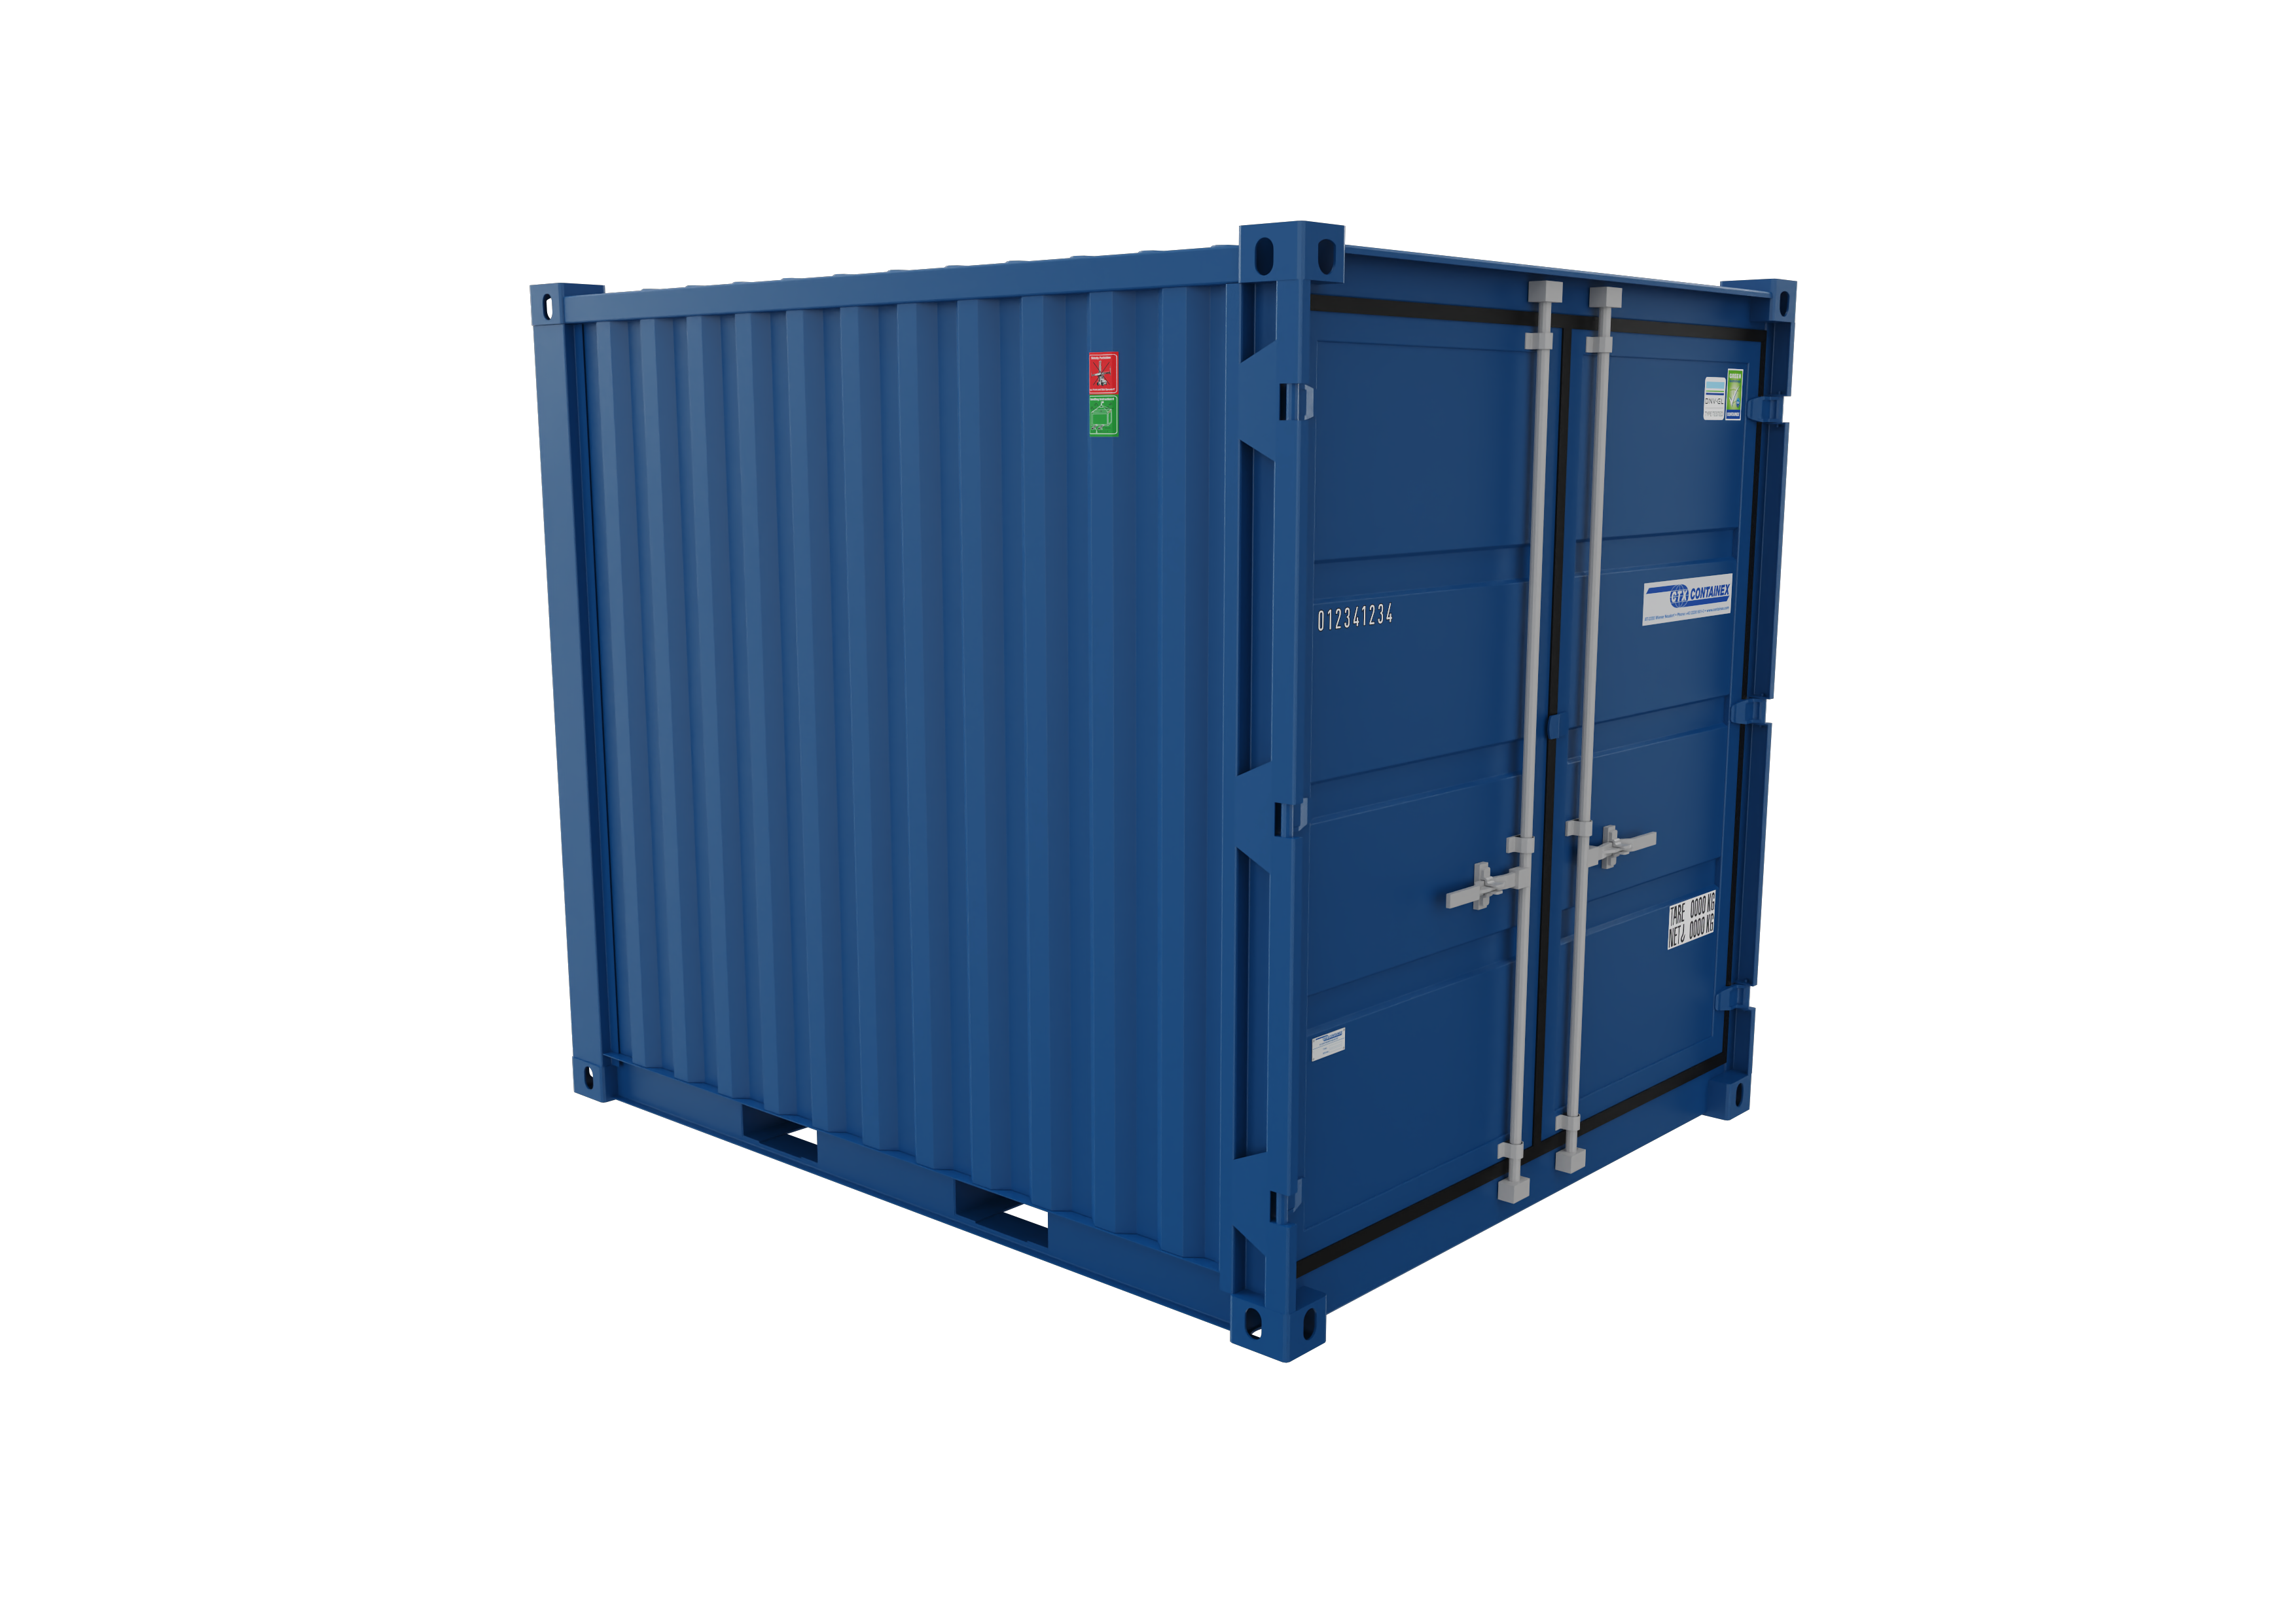 10' Storage container